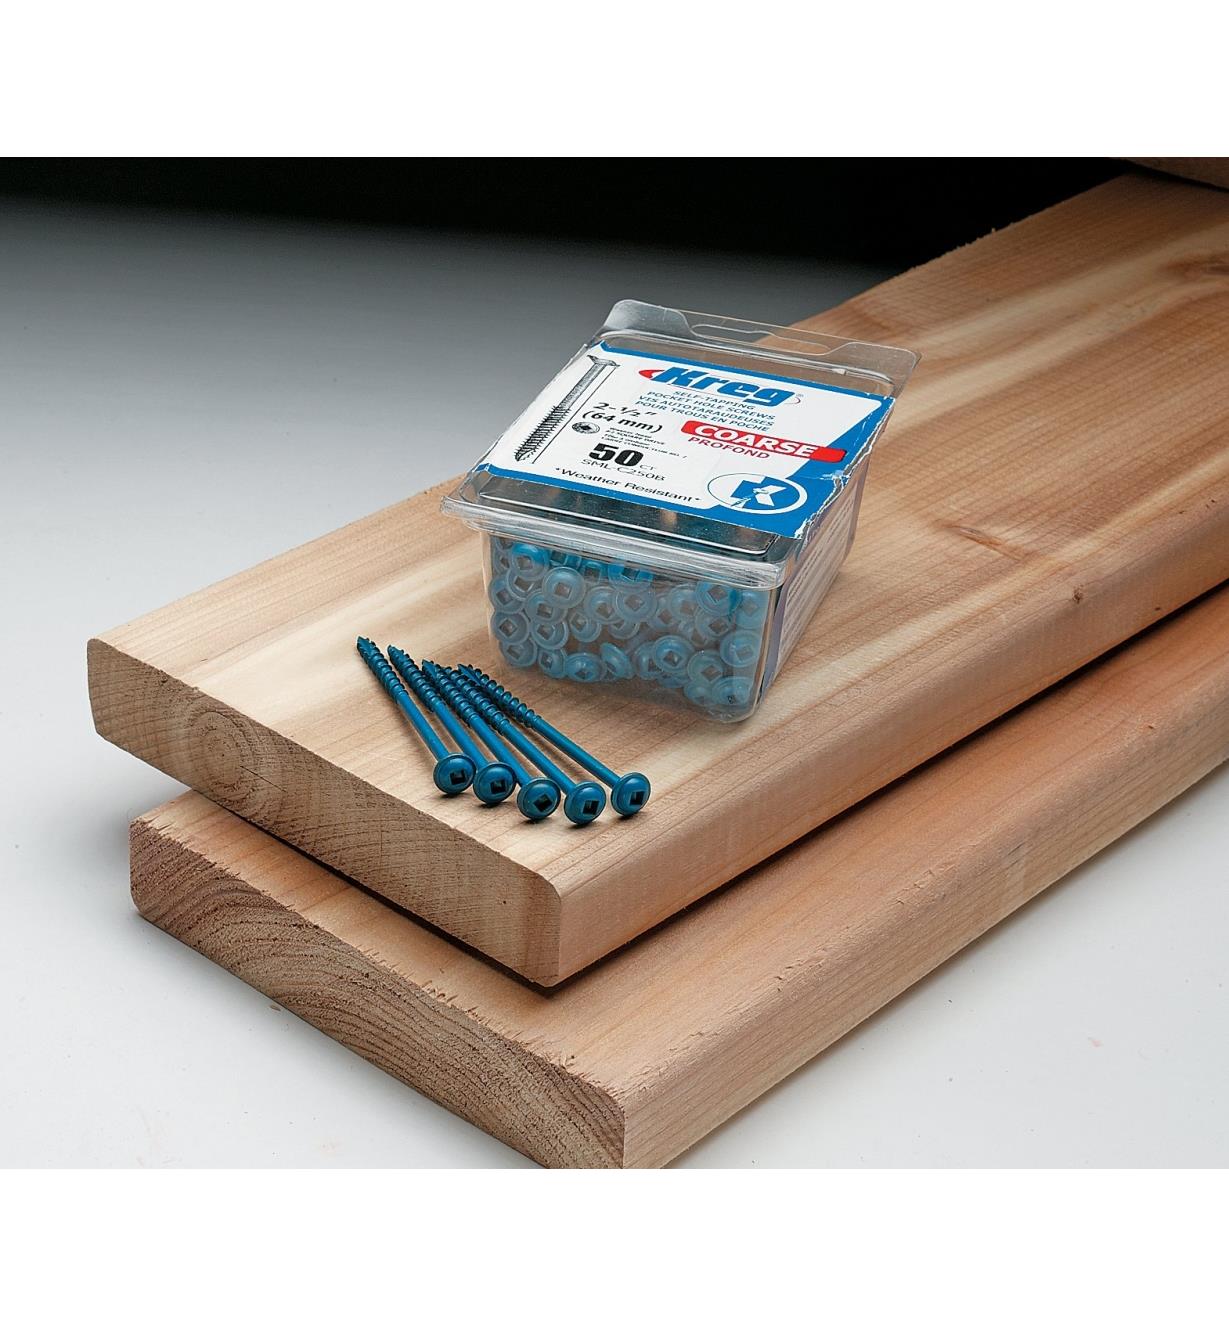 Box of Blue-Kote screws sitting on two deck boards beside several screws